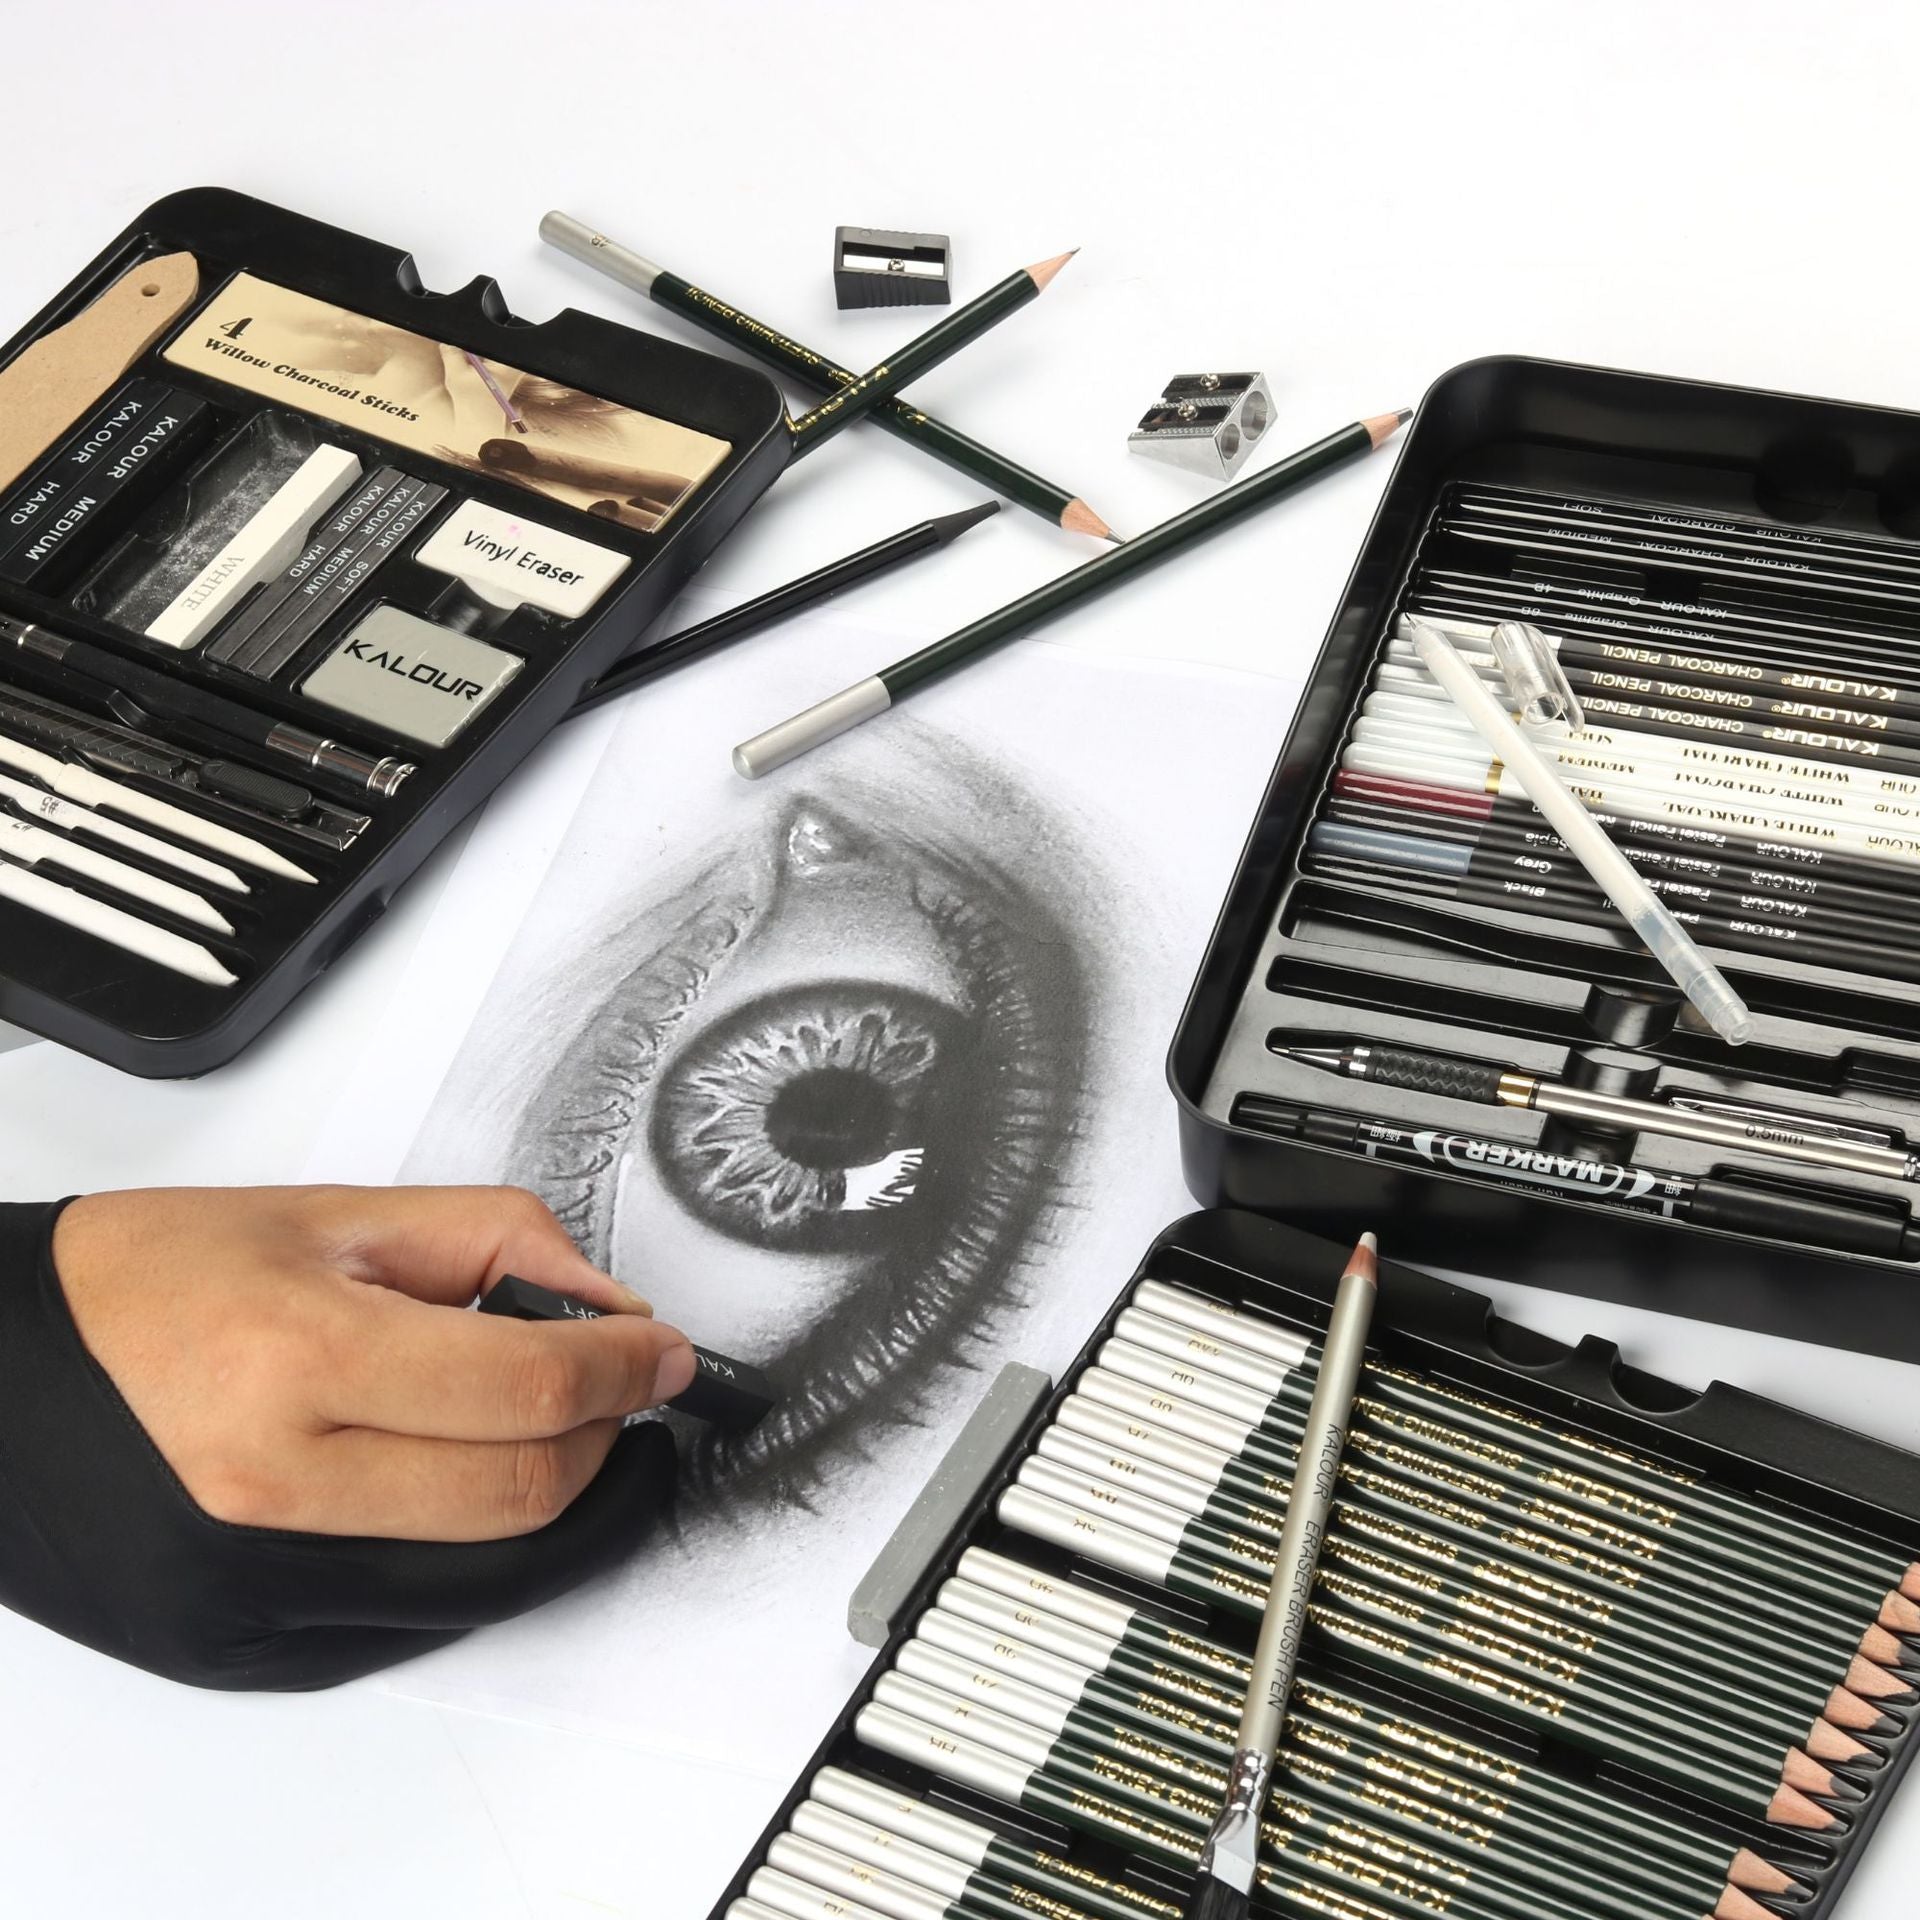 KALOUR 70 Pack Art Supplies Sketching Drawing Pencils Set Tin Box